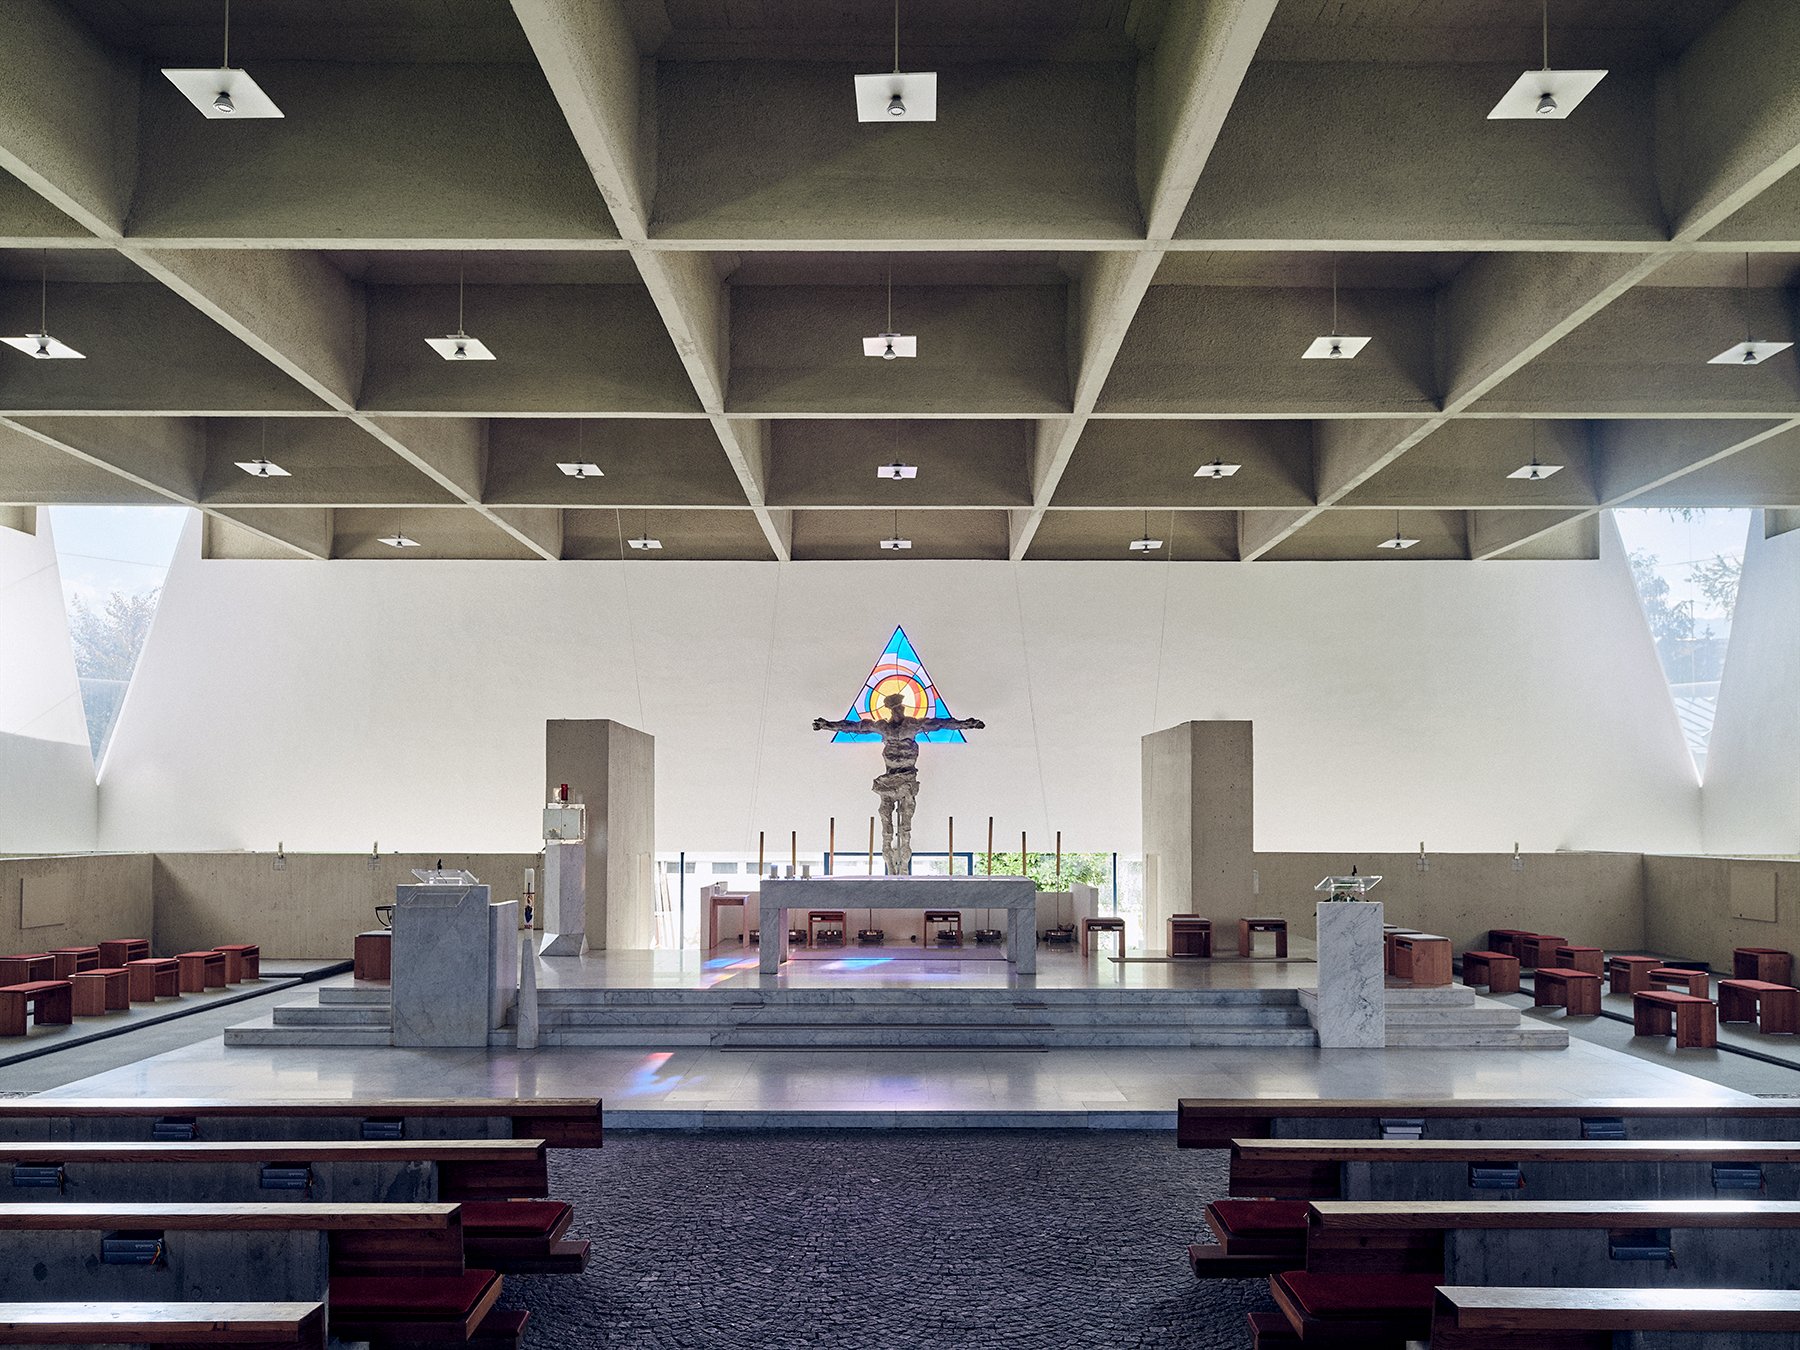 St. Pius Kirche - Innsbruck, Austria - Josef Lackner, 1958-1960